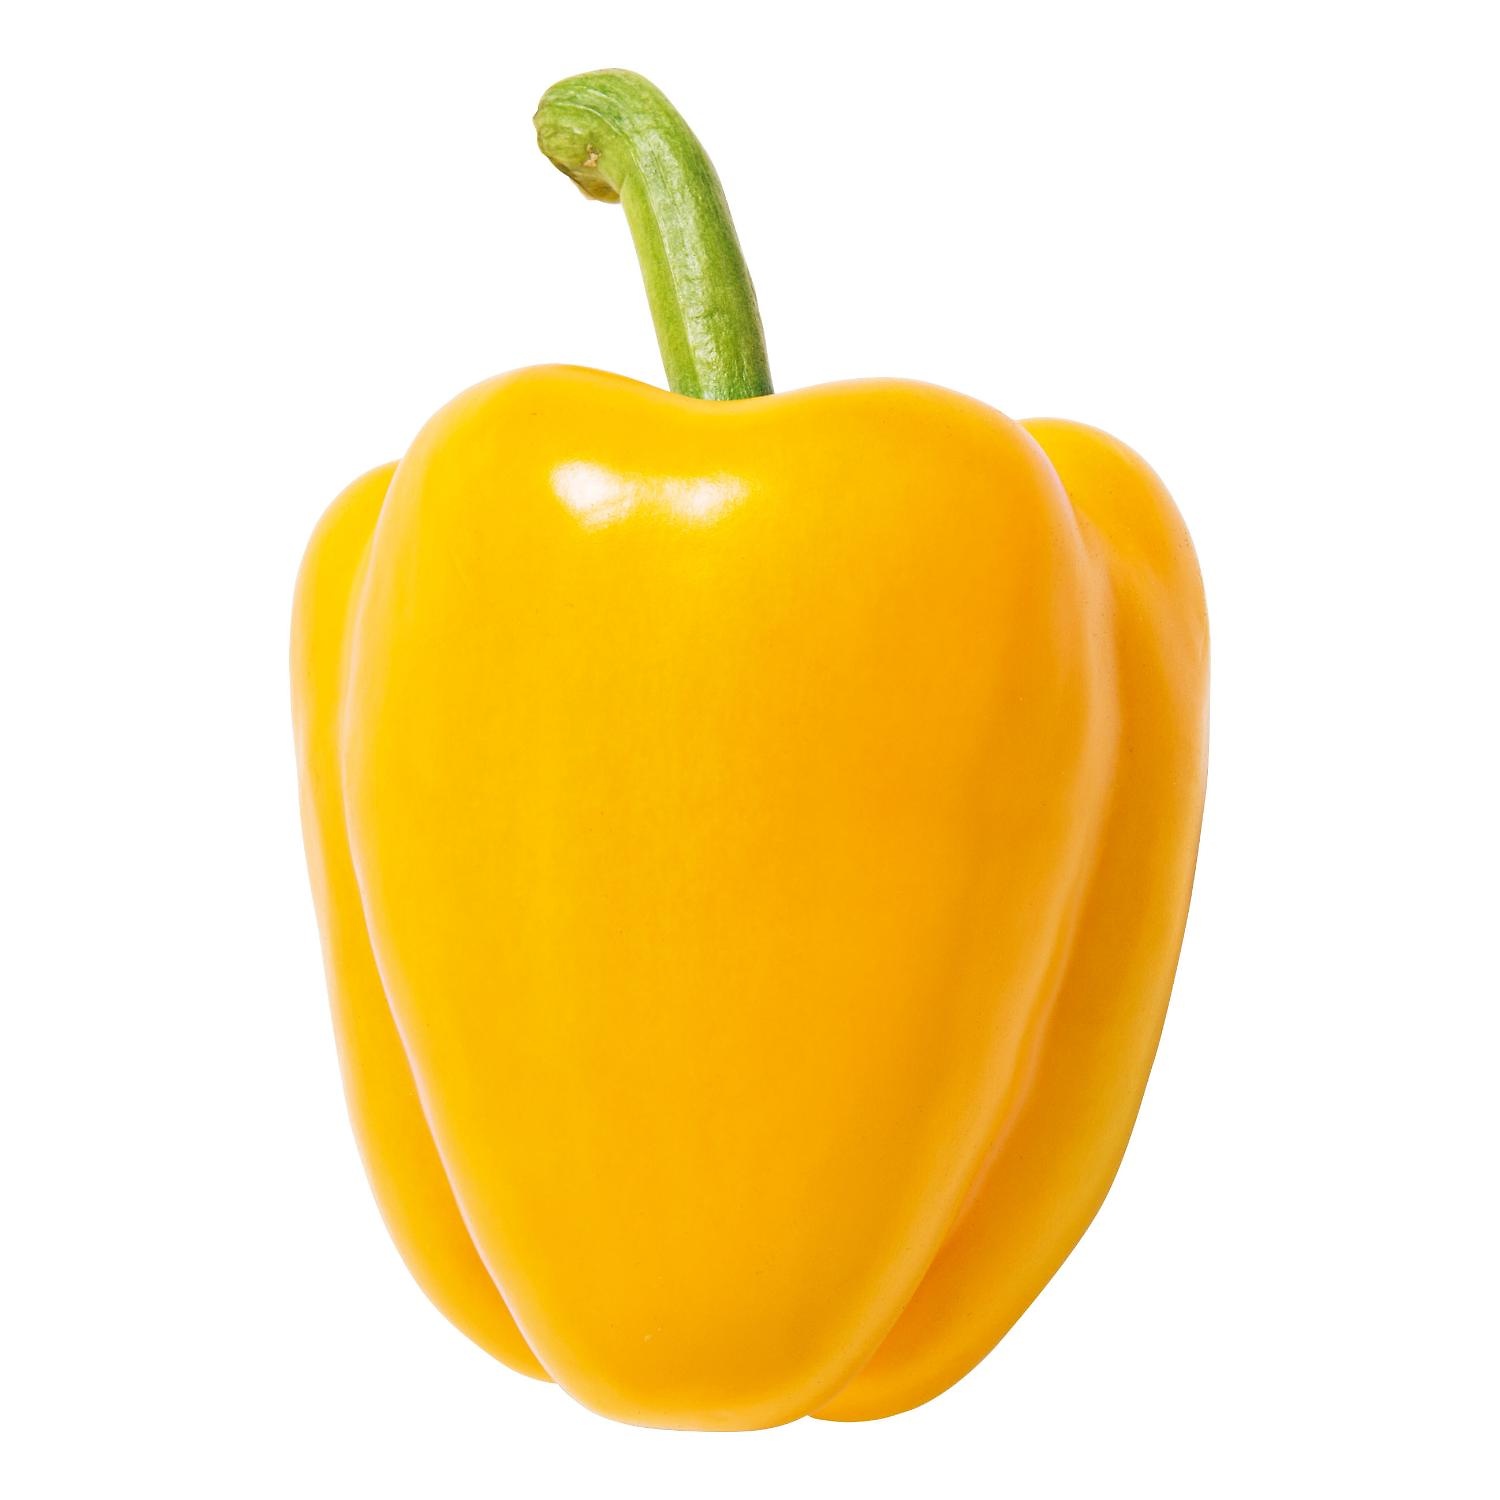 Paprika geel per stuk